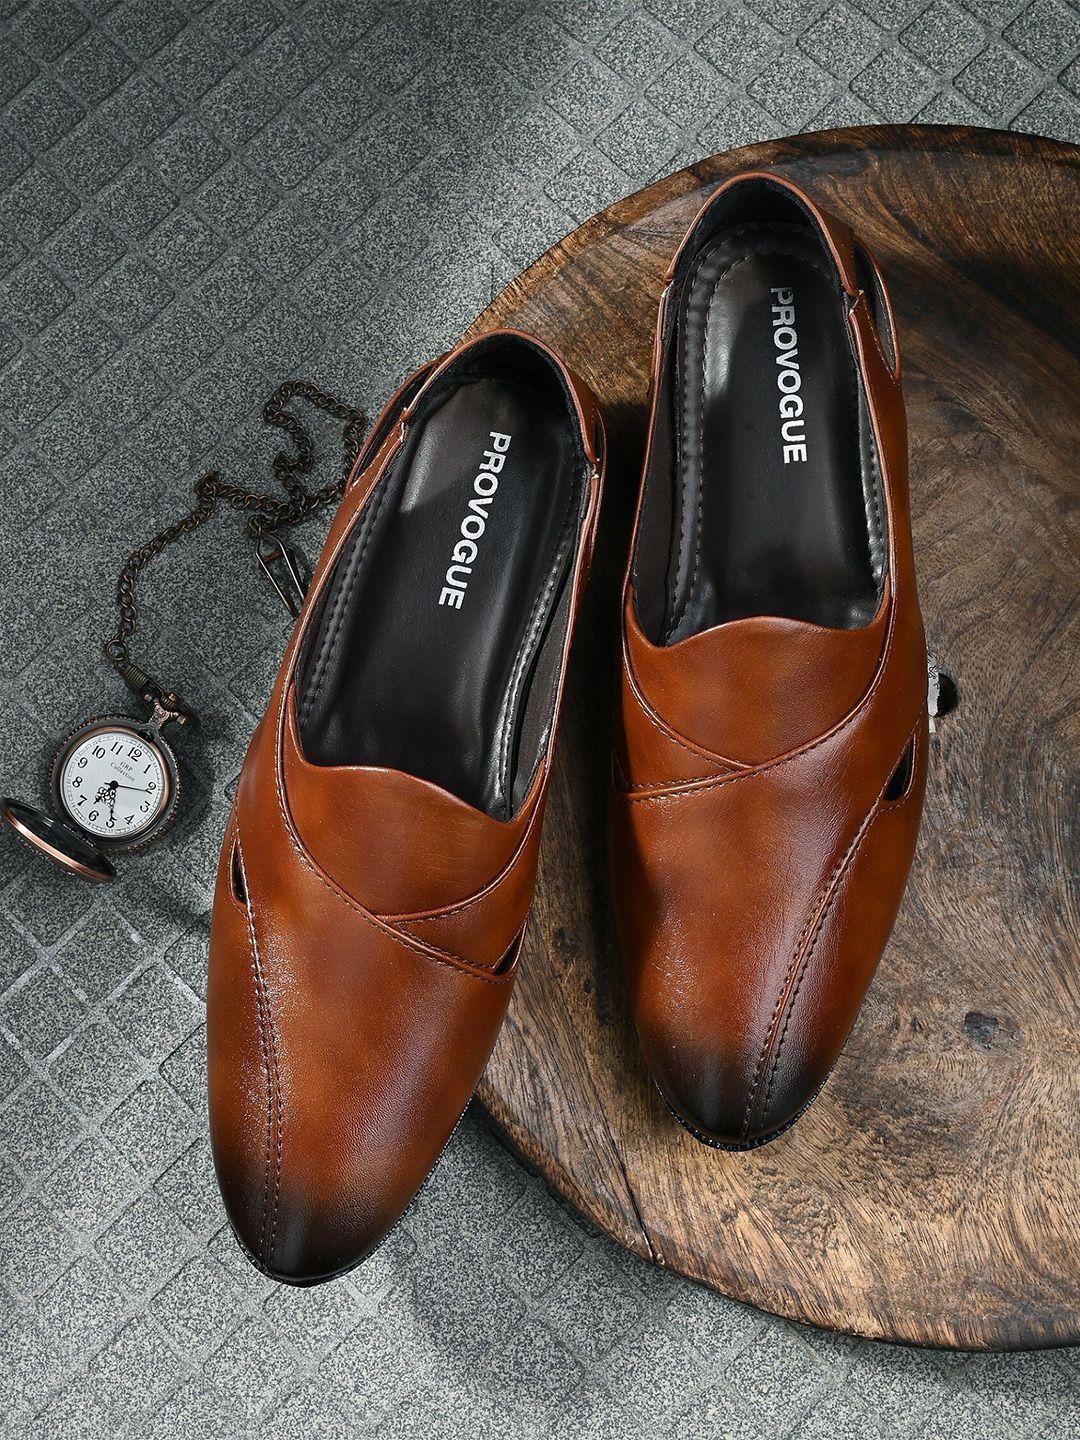 provogue-men-round-toe-slip-on-shoe-style-sandals